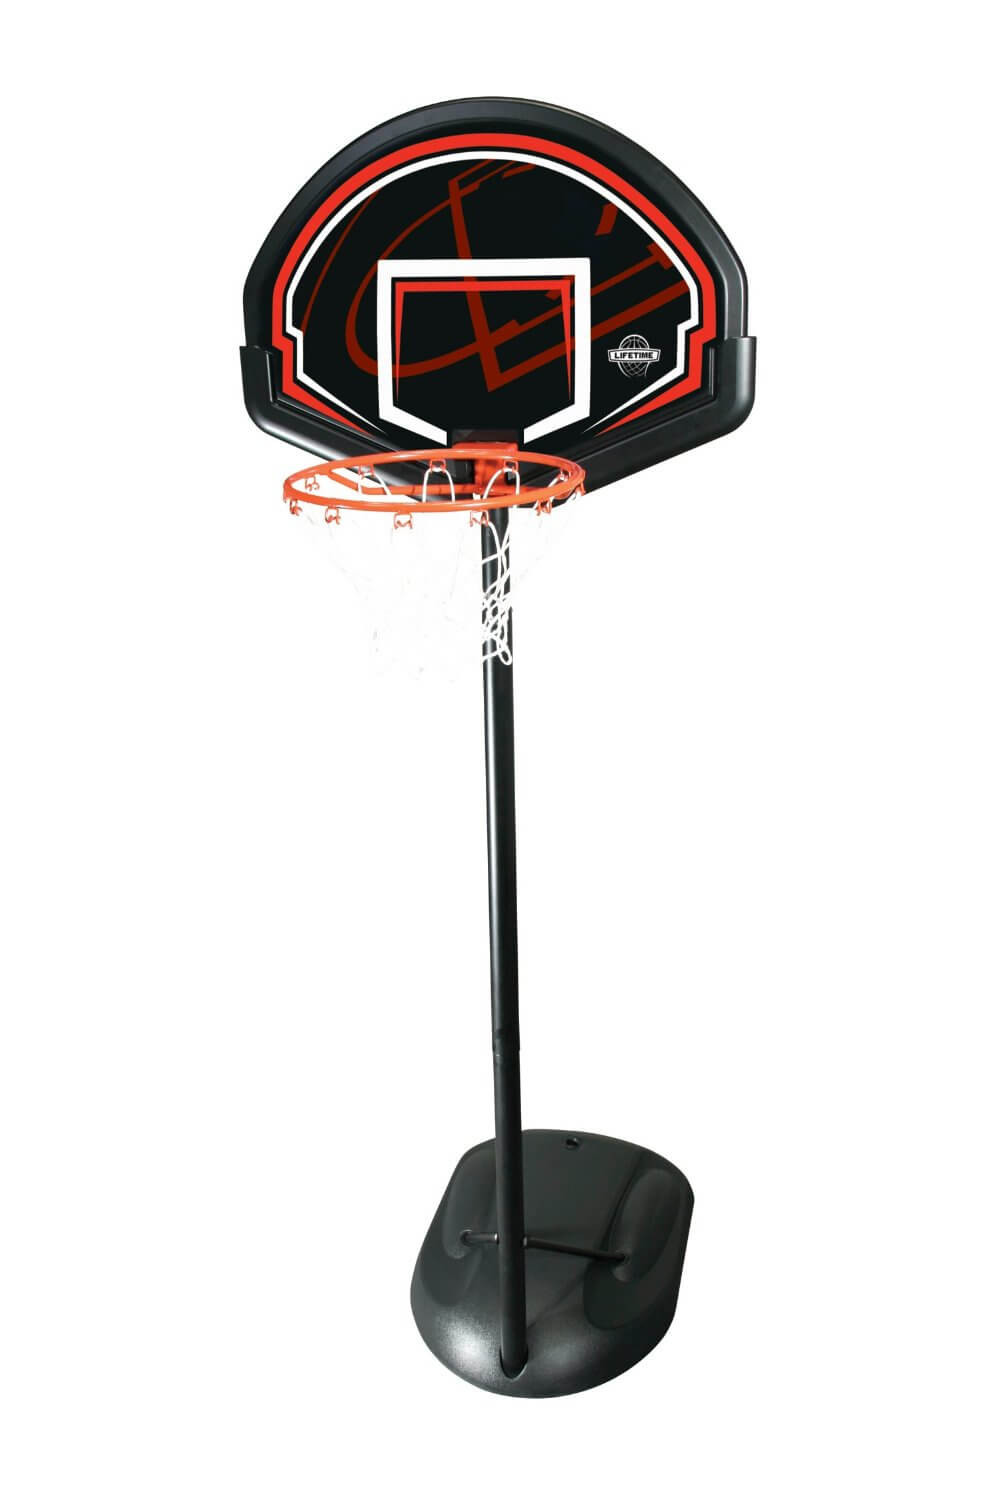 Kids Indoor Basketball Hoop
 Basketball Hoops for Kids BestOutdoorBasketball